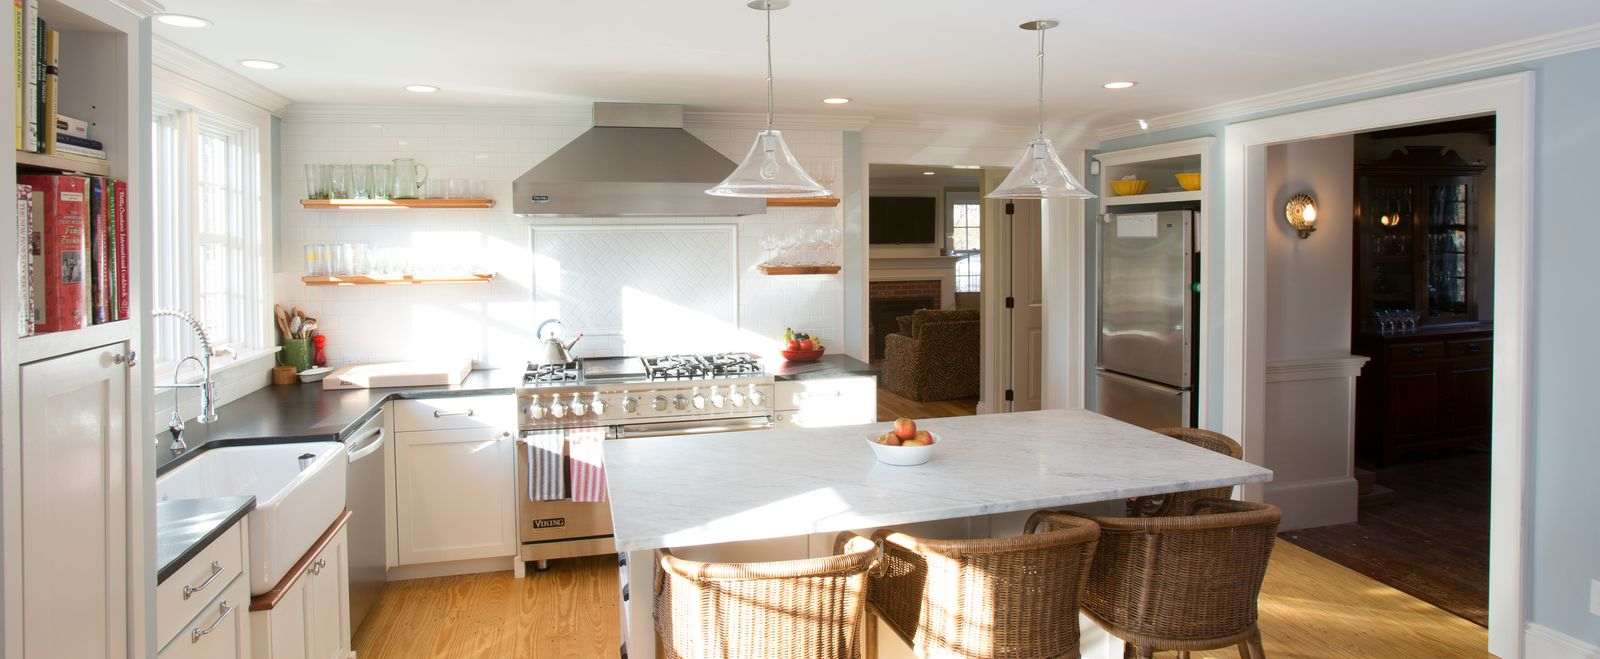 white kitchen renovation in new hapshire with white tile backsplash and kitchen island